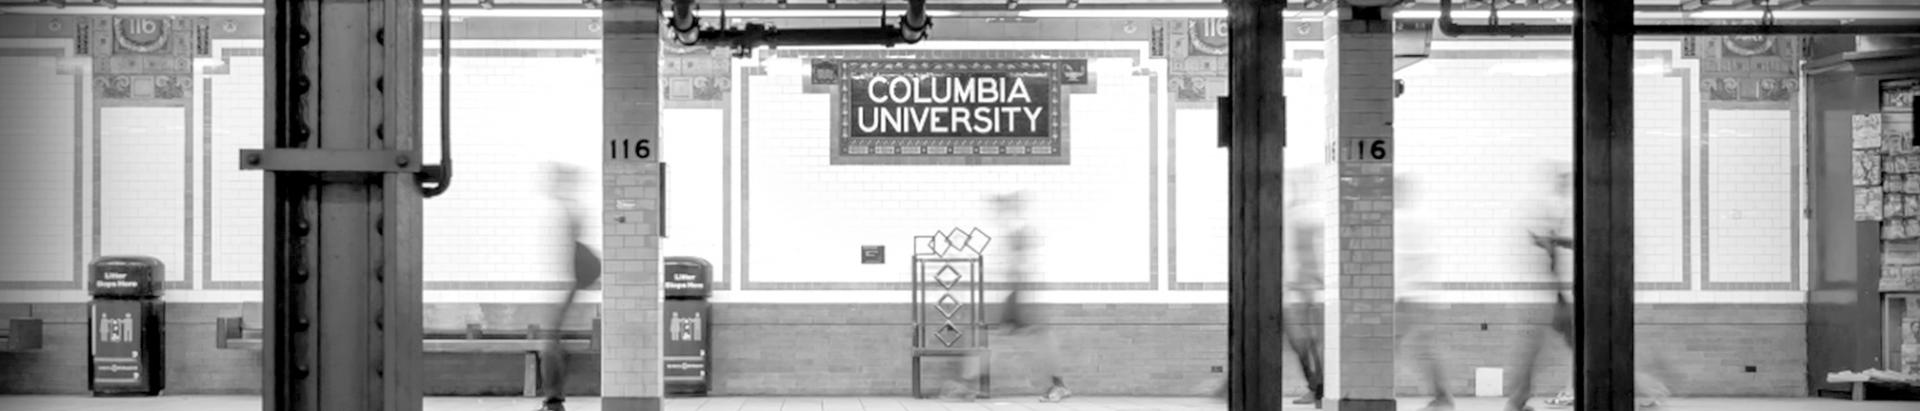 subway station at Columbia University